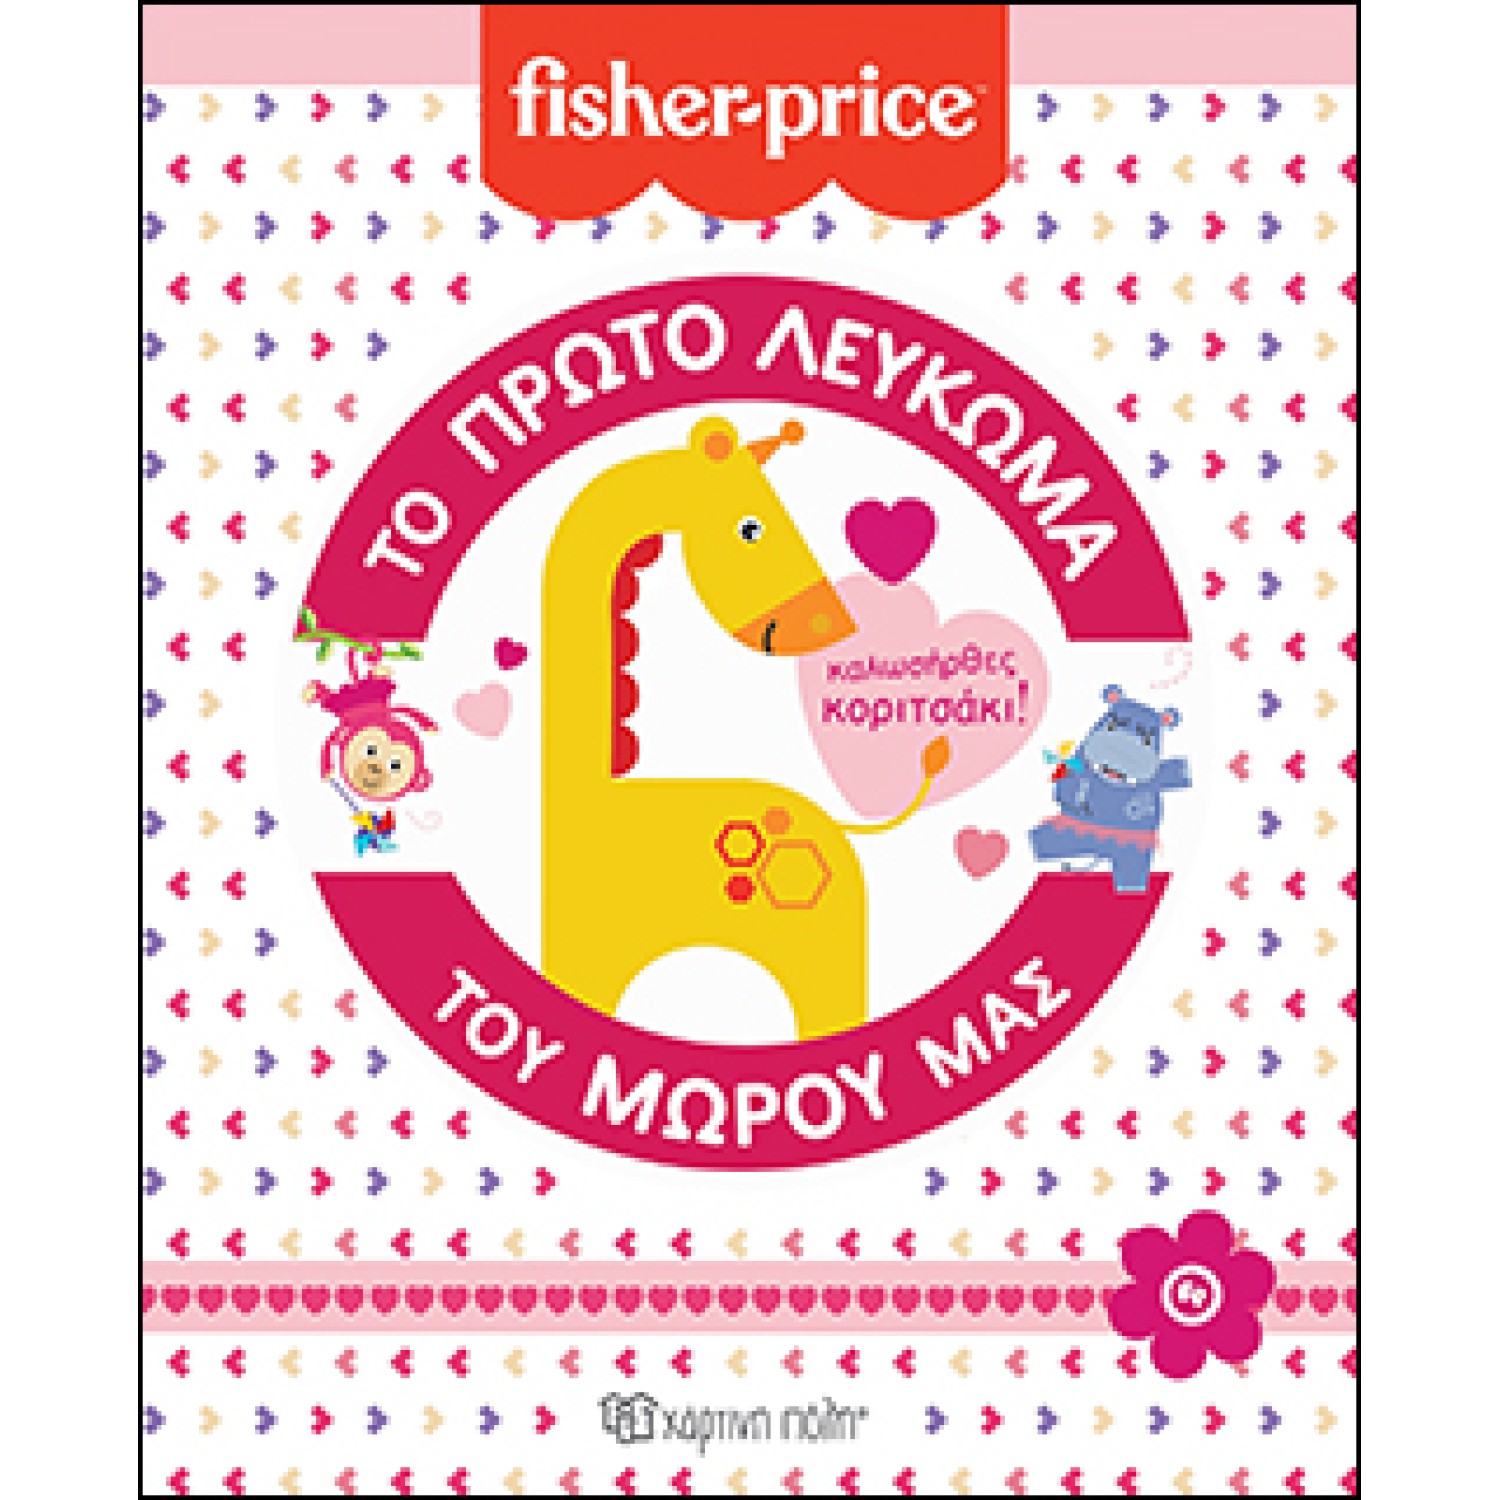 FISHER PRICE-Το Πρώτο Λεύκωμα του Μωρού μας-Καλωσήρθες, Κοριτσάκι